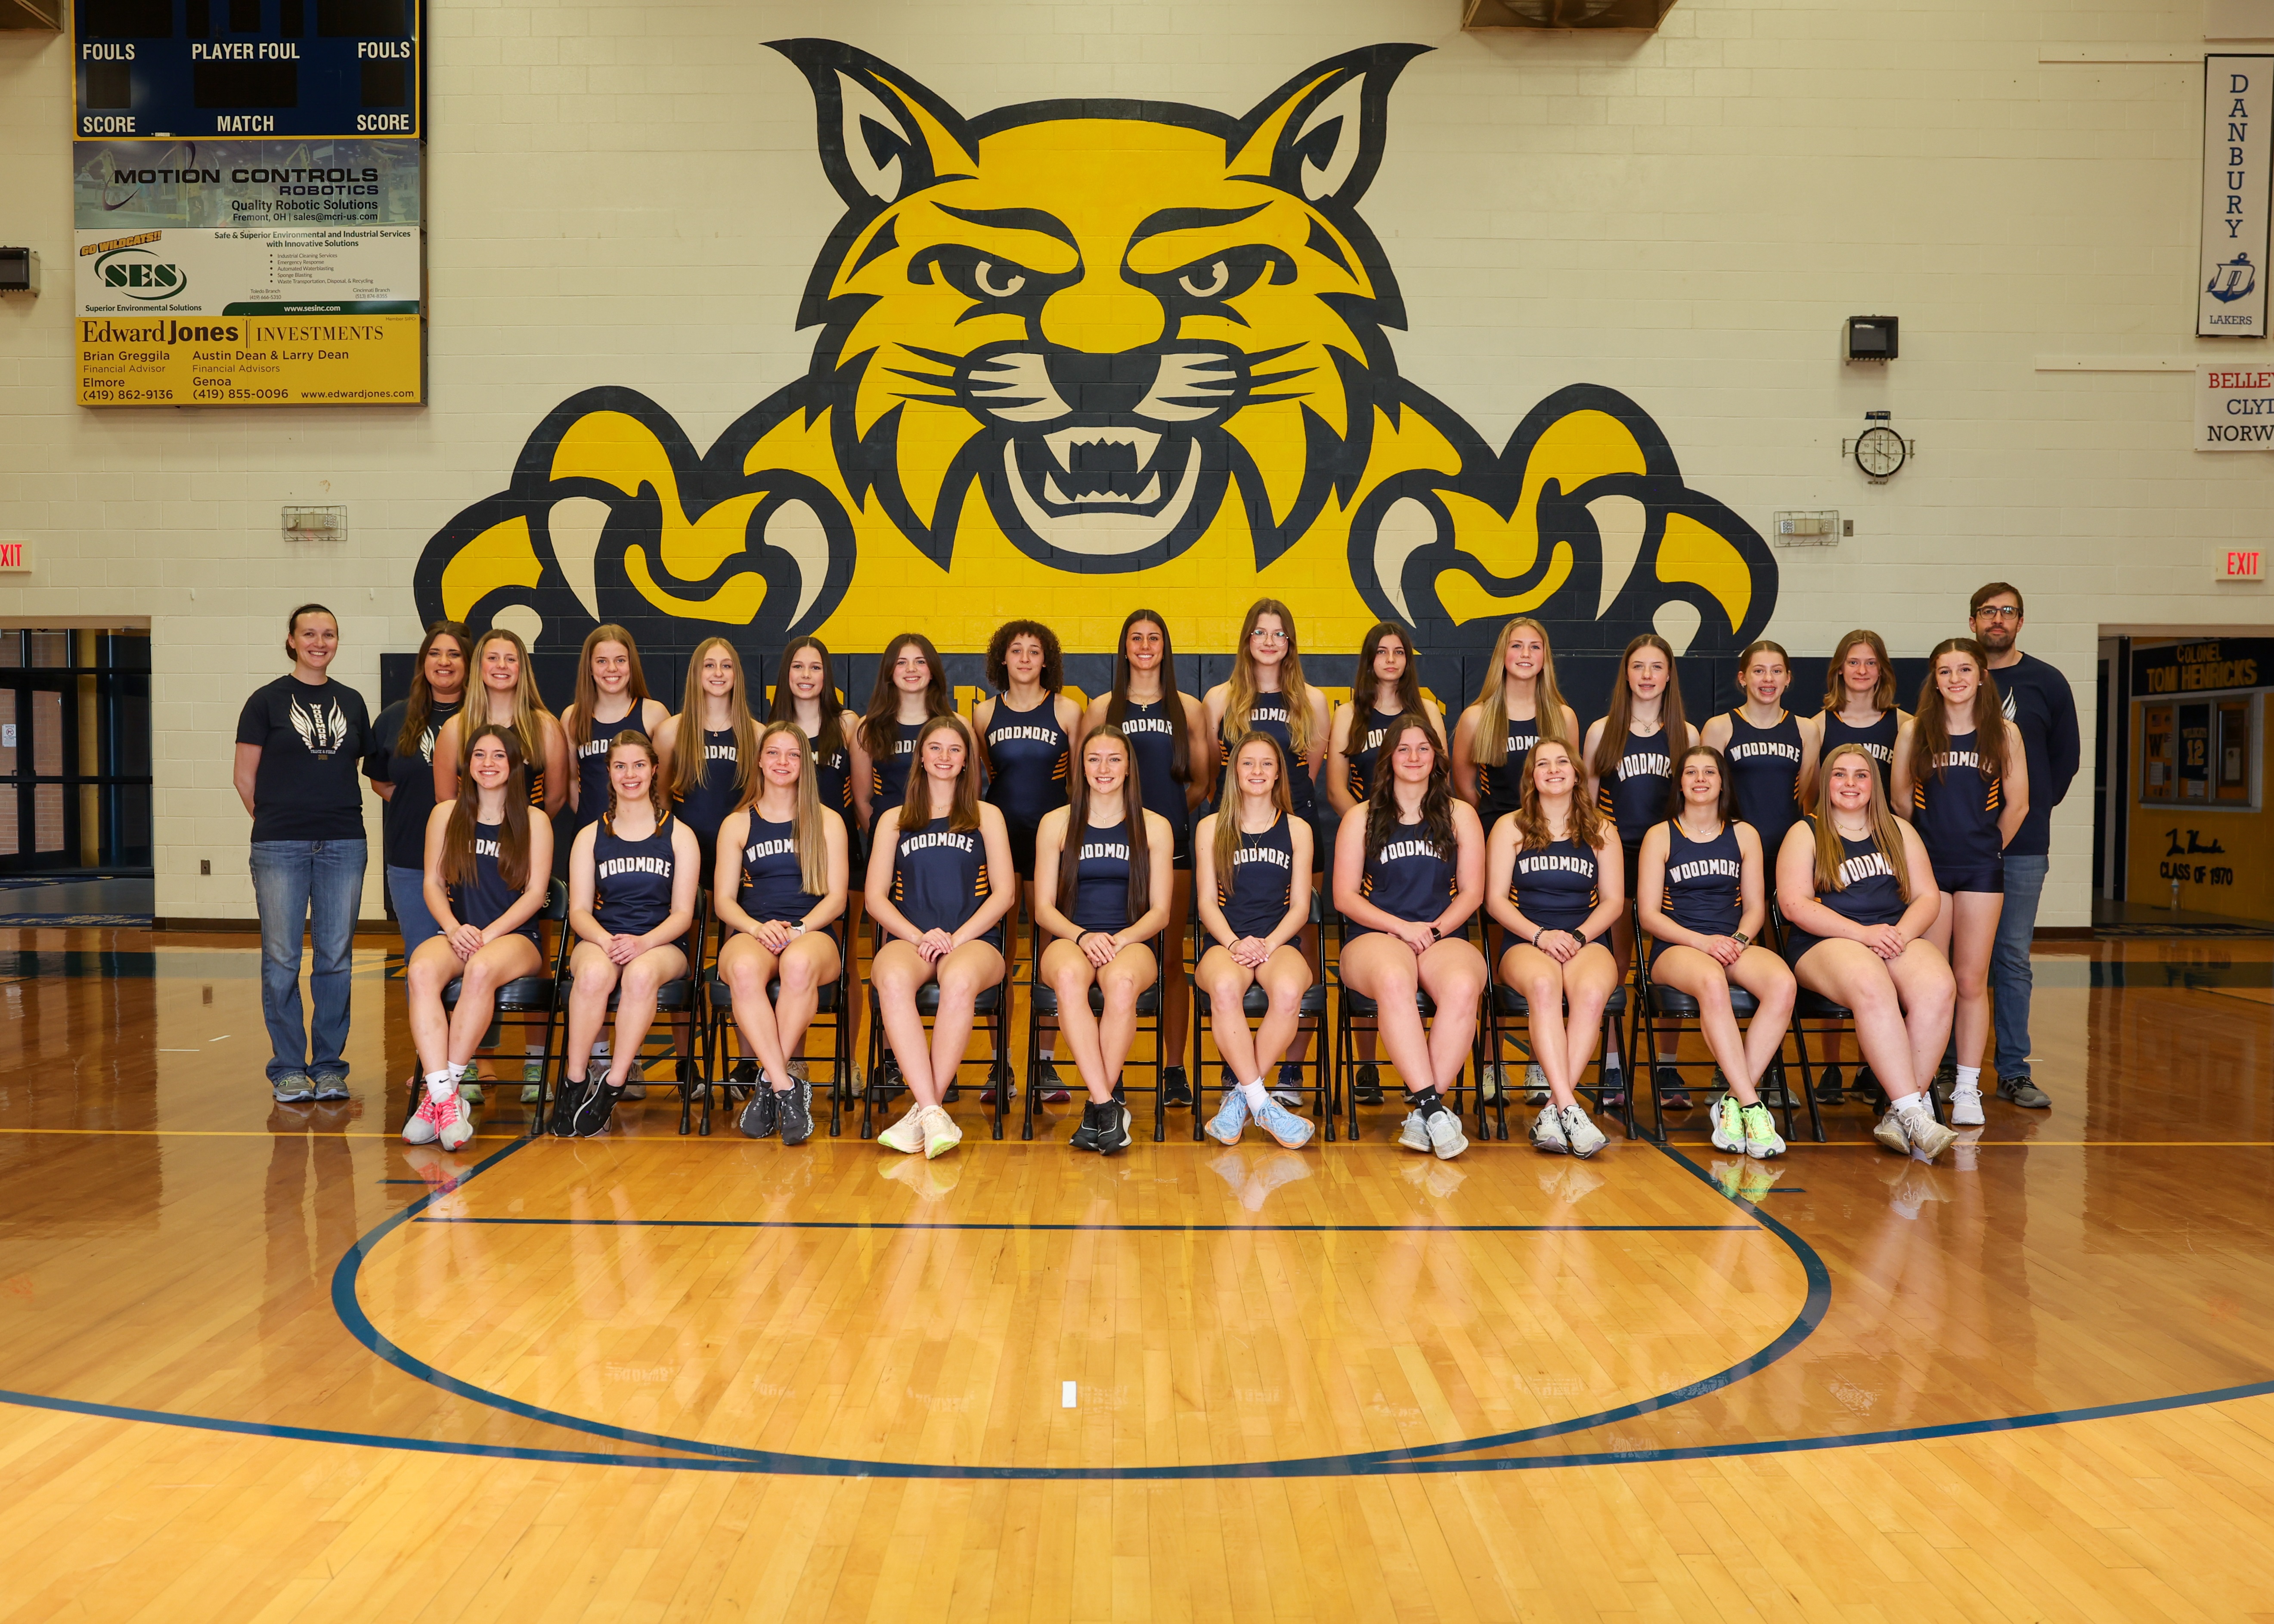 High school girls track team photo in basketball gym